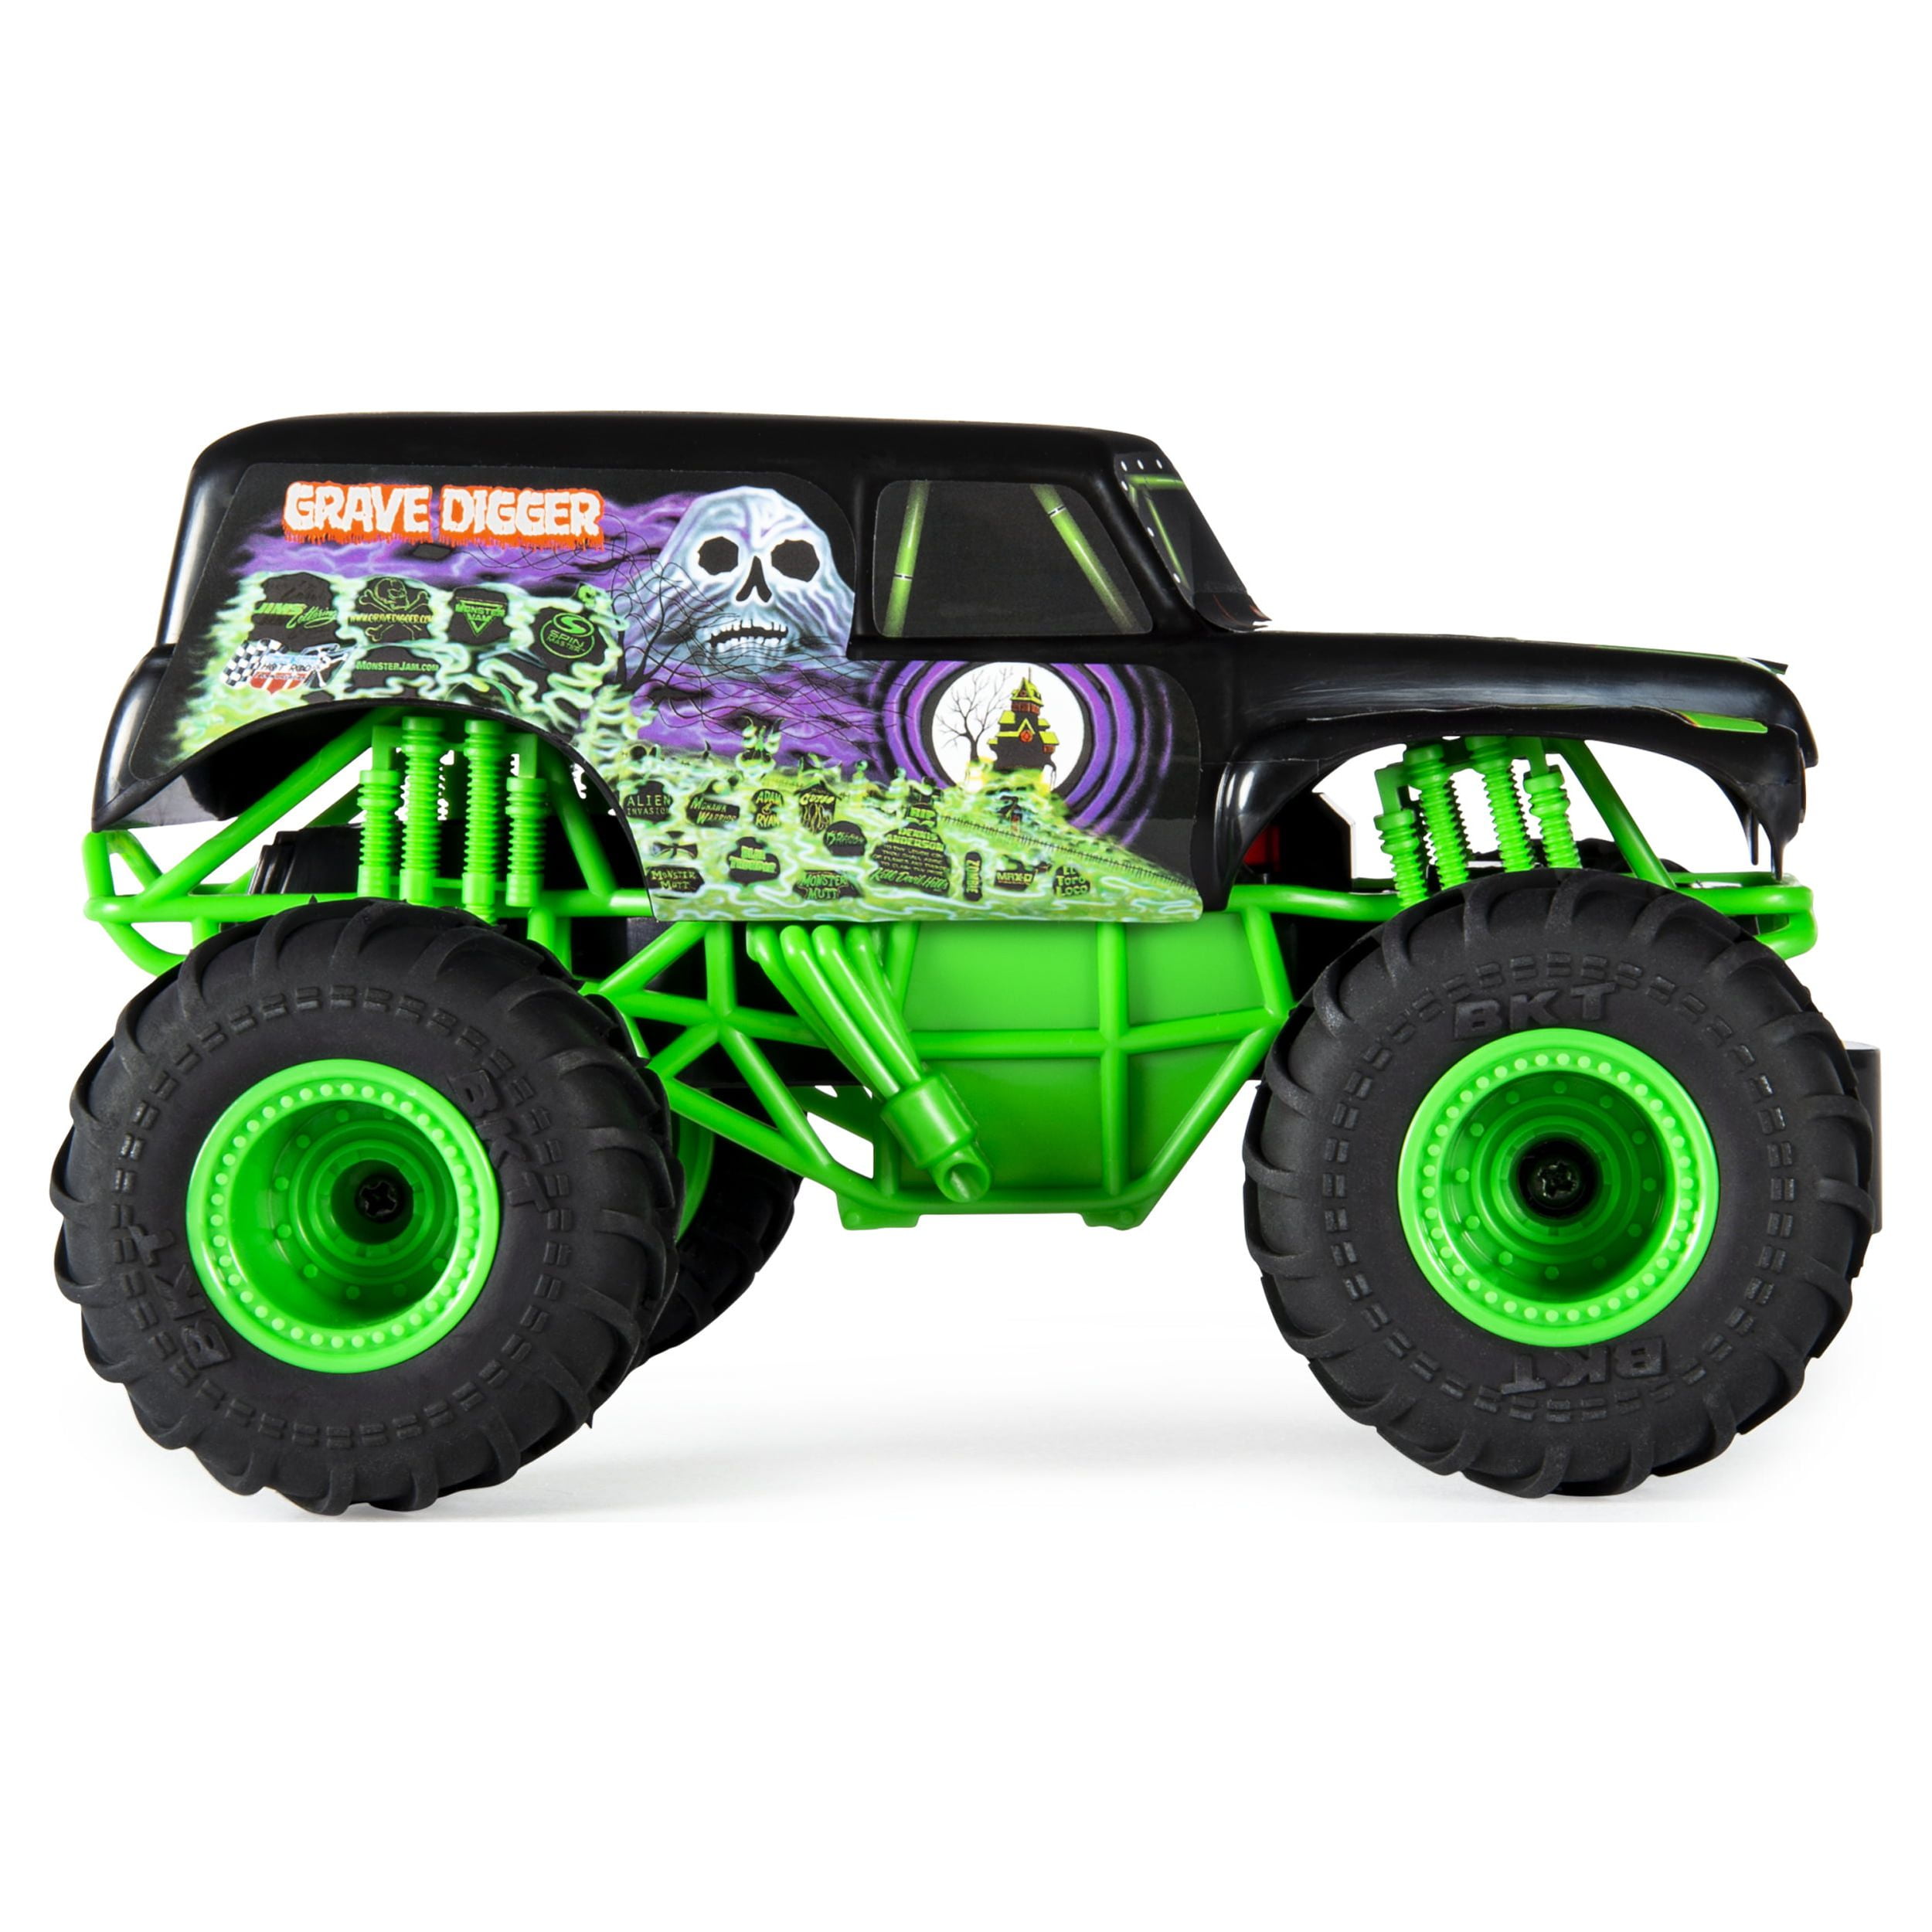 Monster Jam Official Grave Digger Vs Megalodon Racing Rivals Remote Control Monster  Trucks - 1:24 Scale - 2 Pk : Target